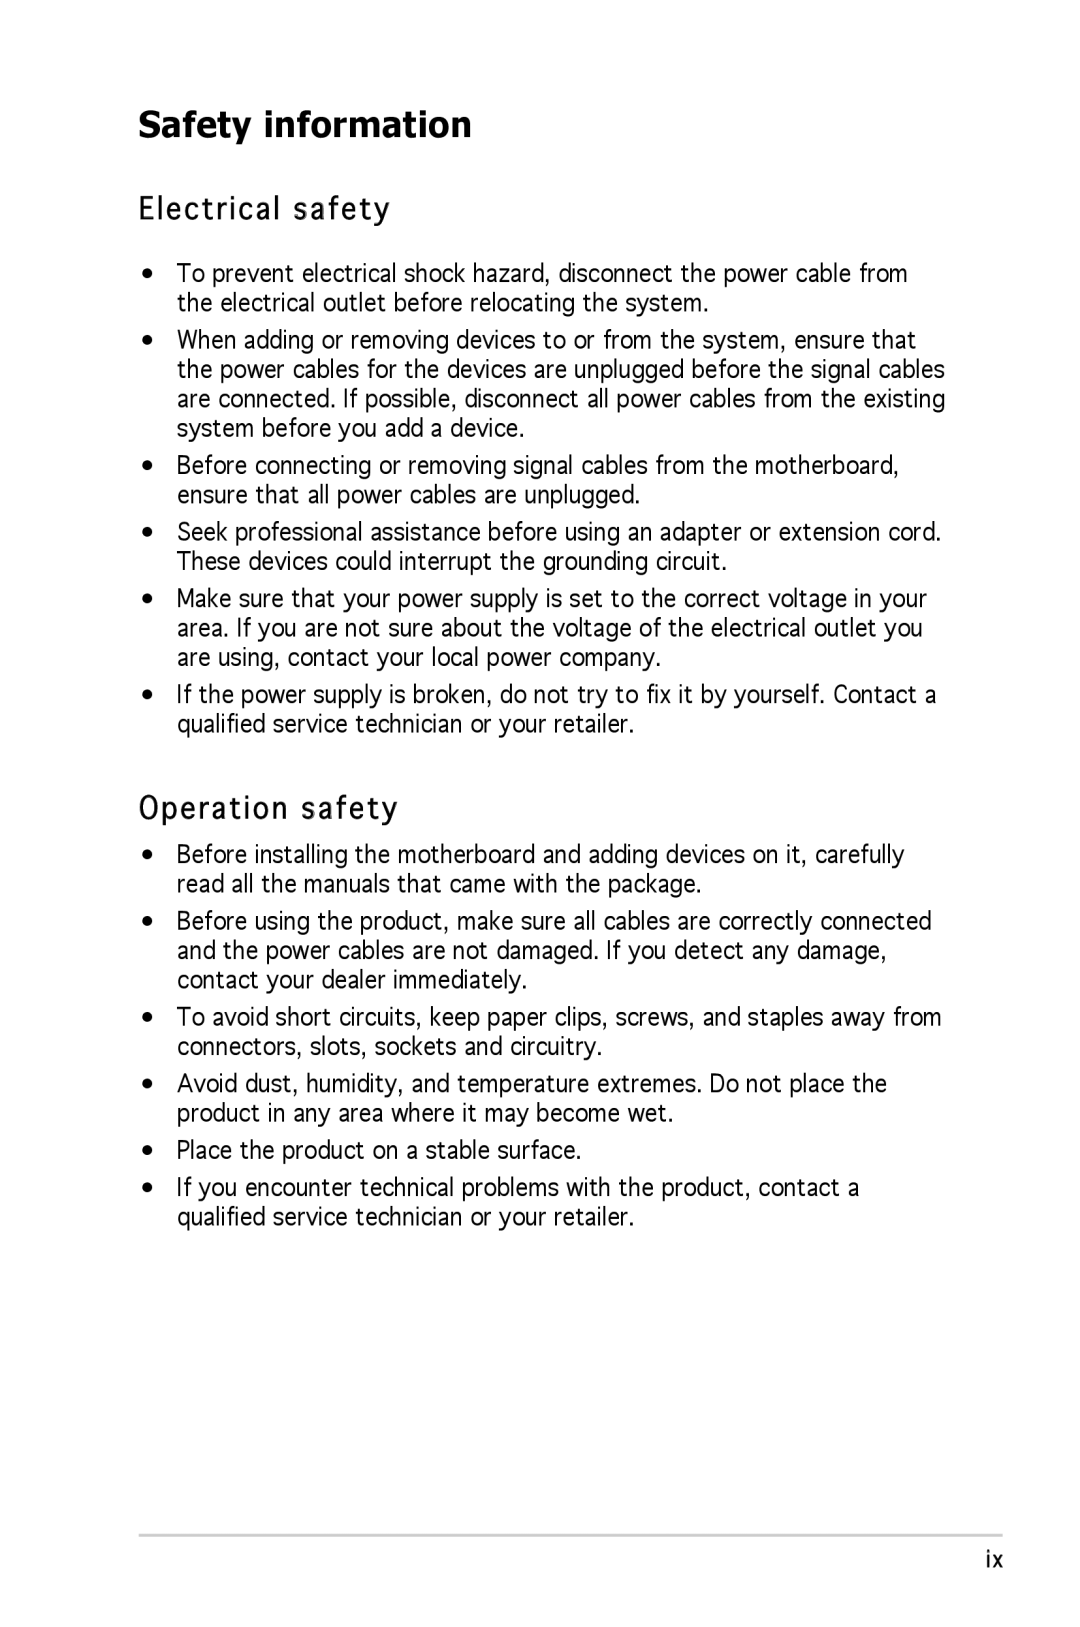 Asus A8N-SLI SE manual Safety information, Electrical safety, Operation safety 